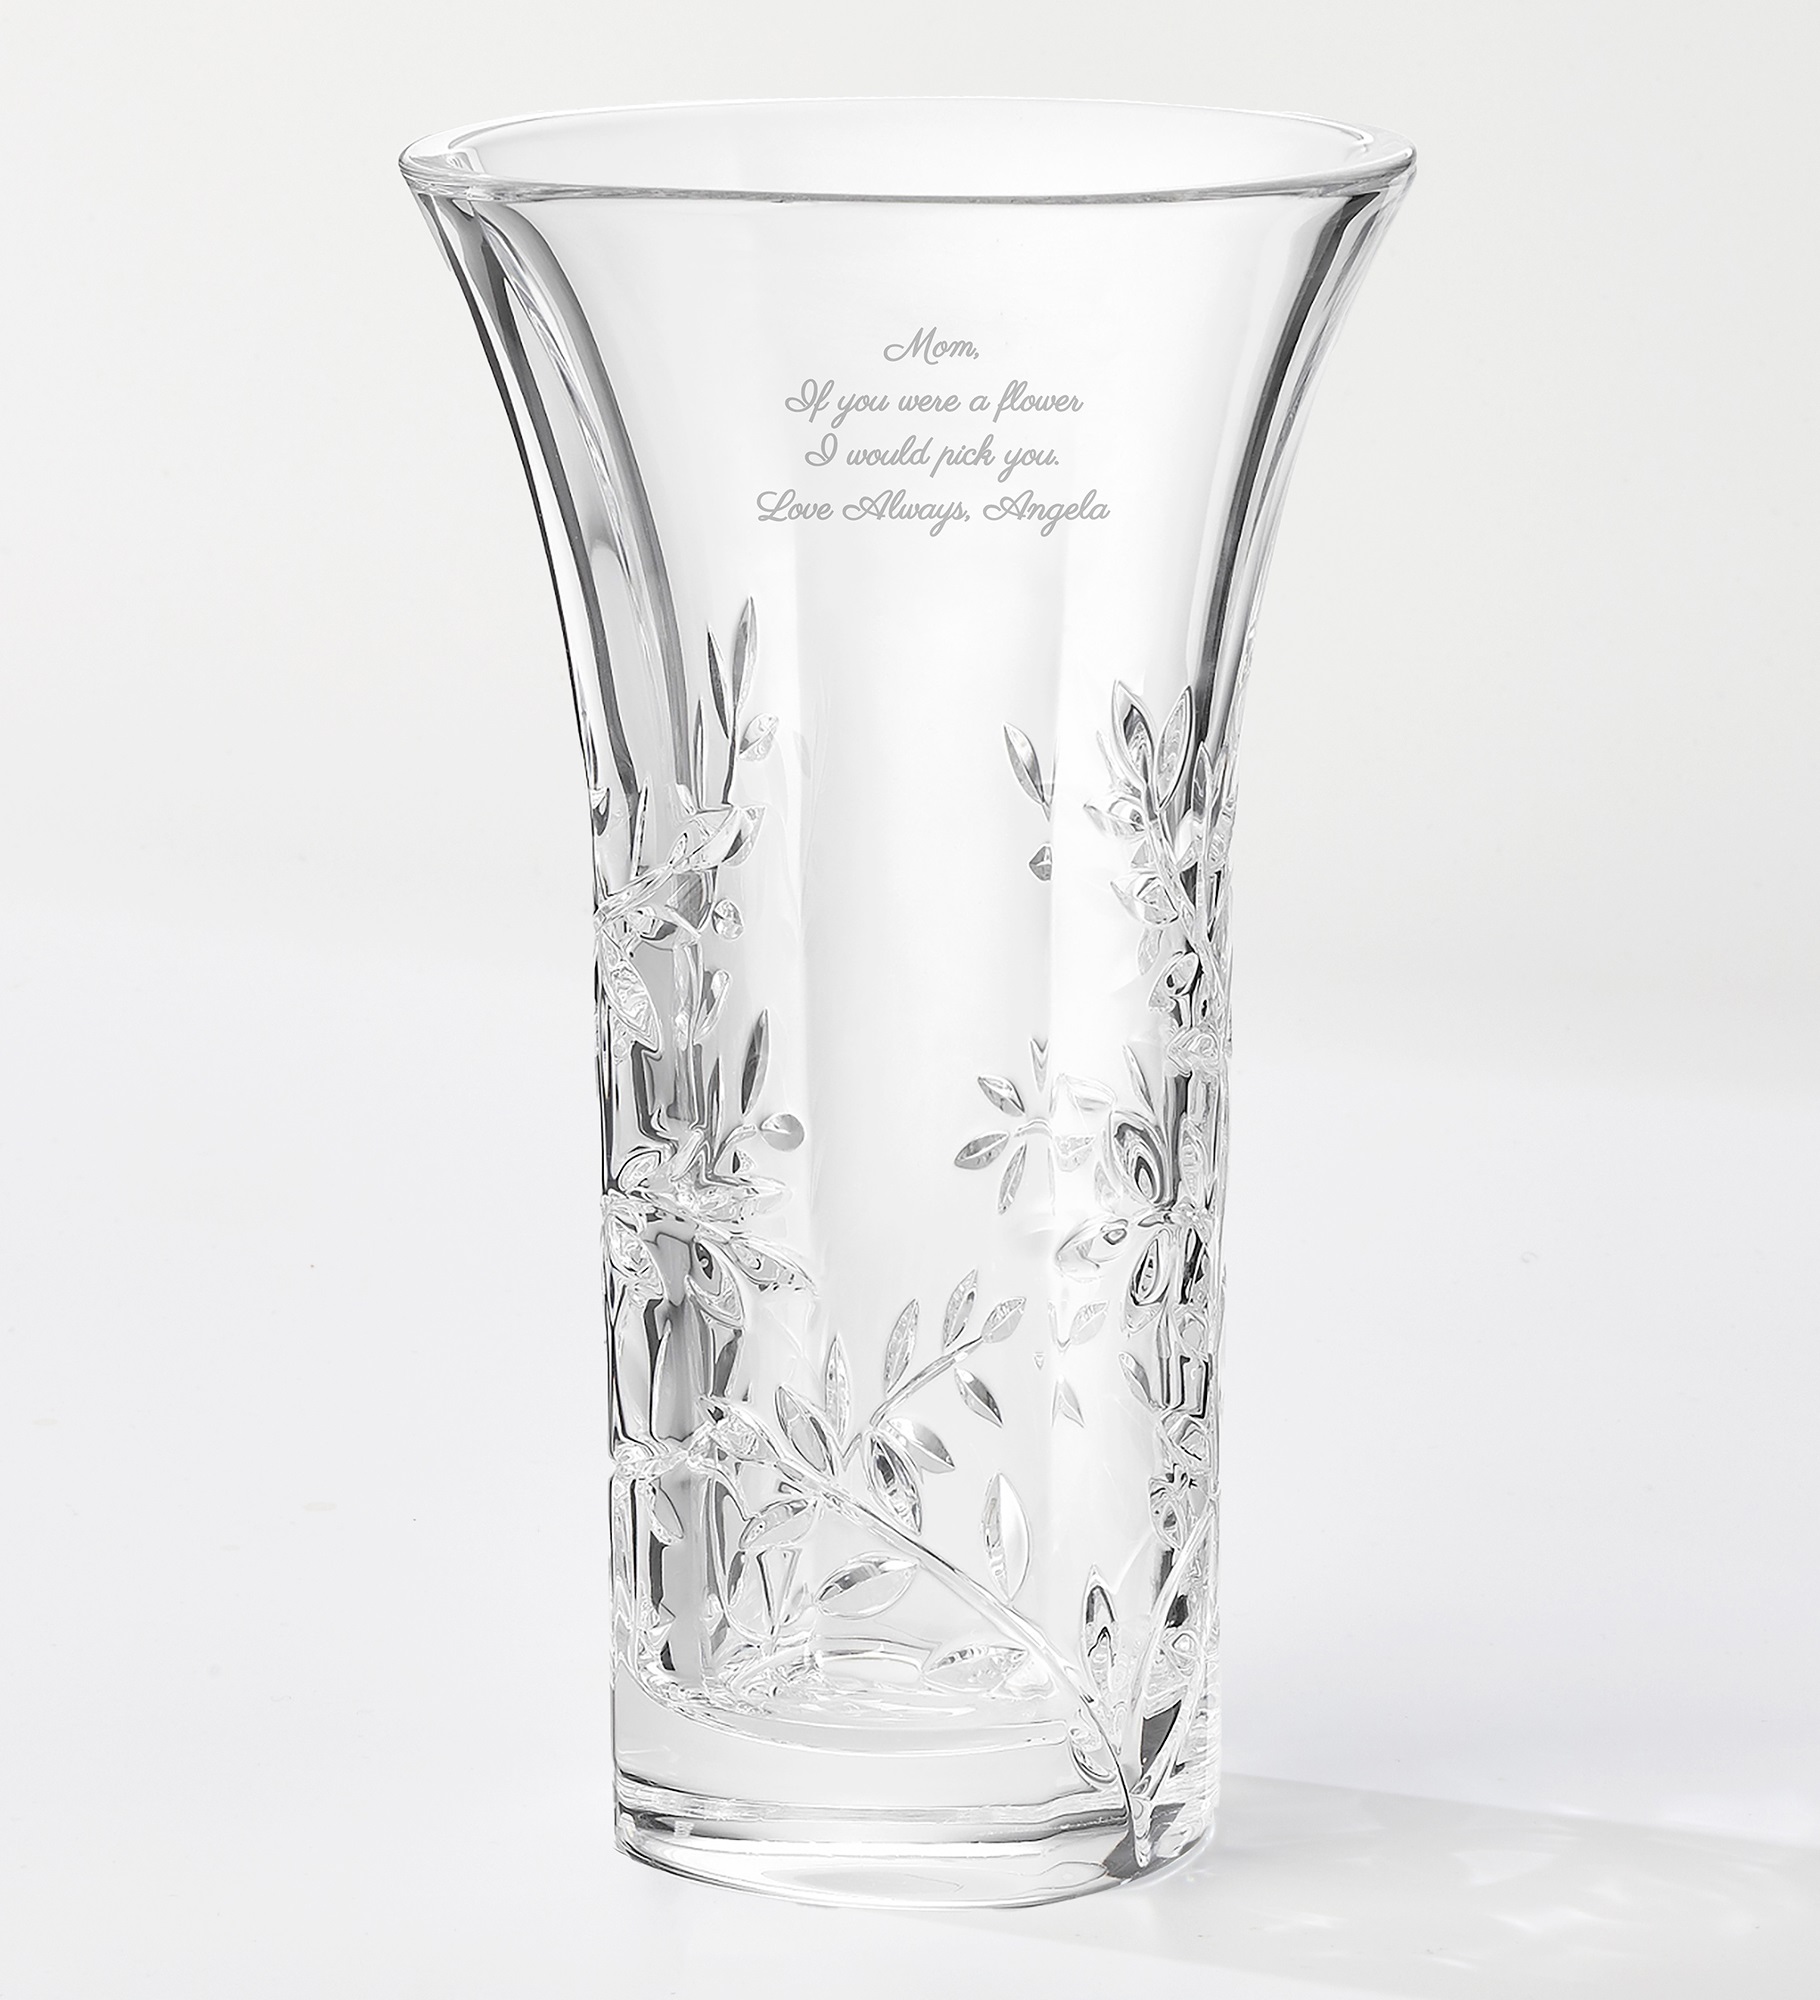  Vera Wang Engraved Crystal Vase for Mom